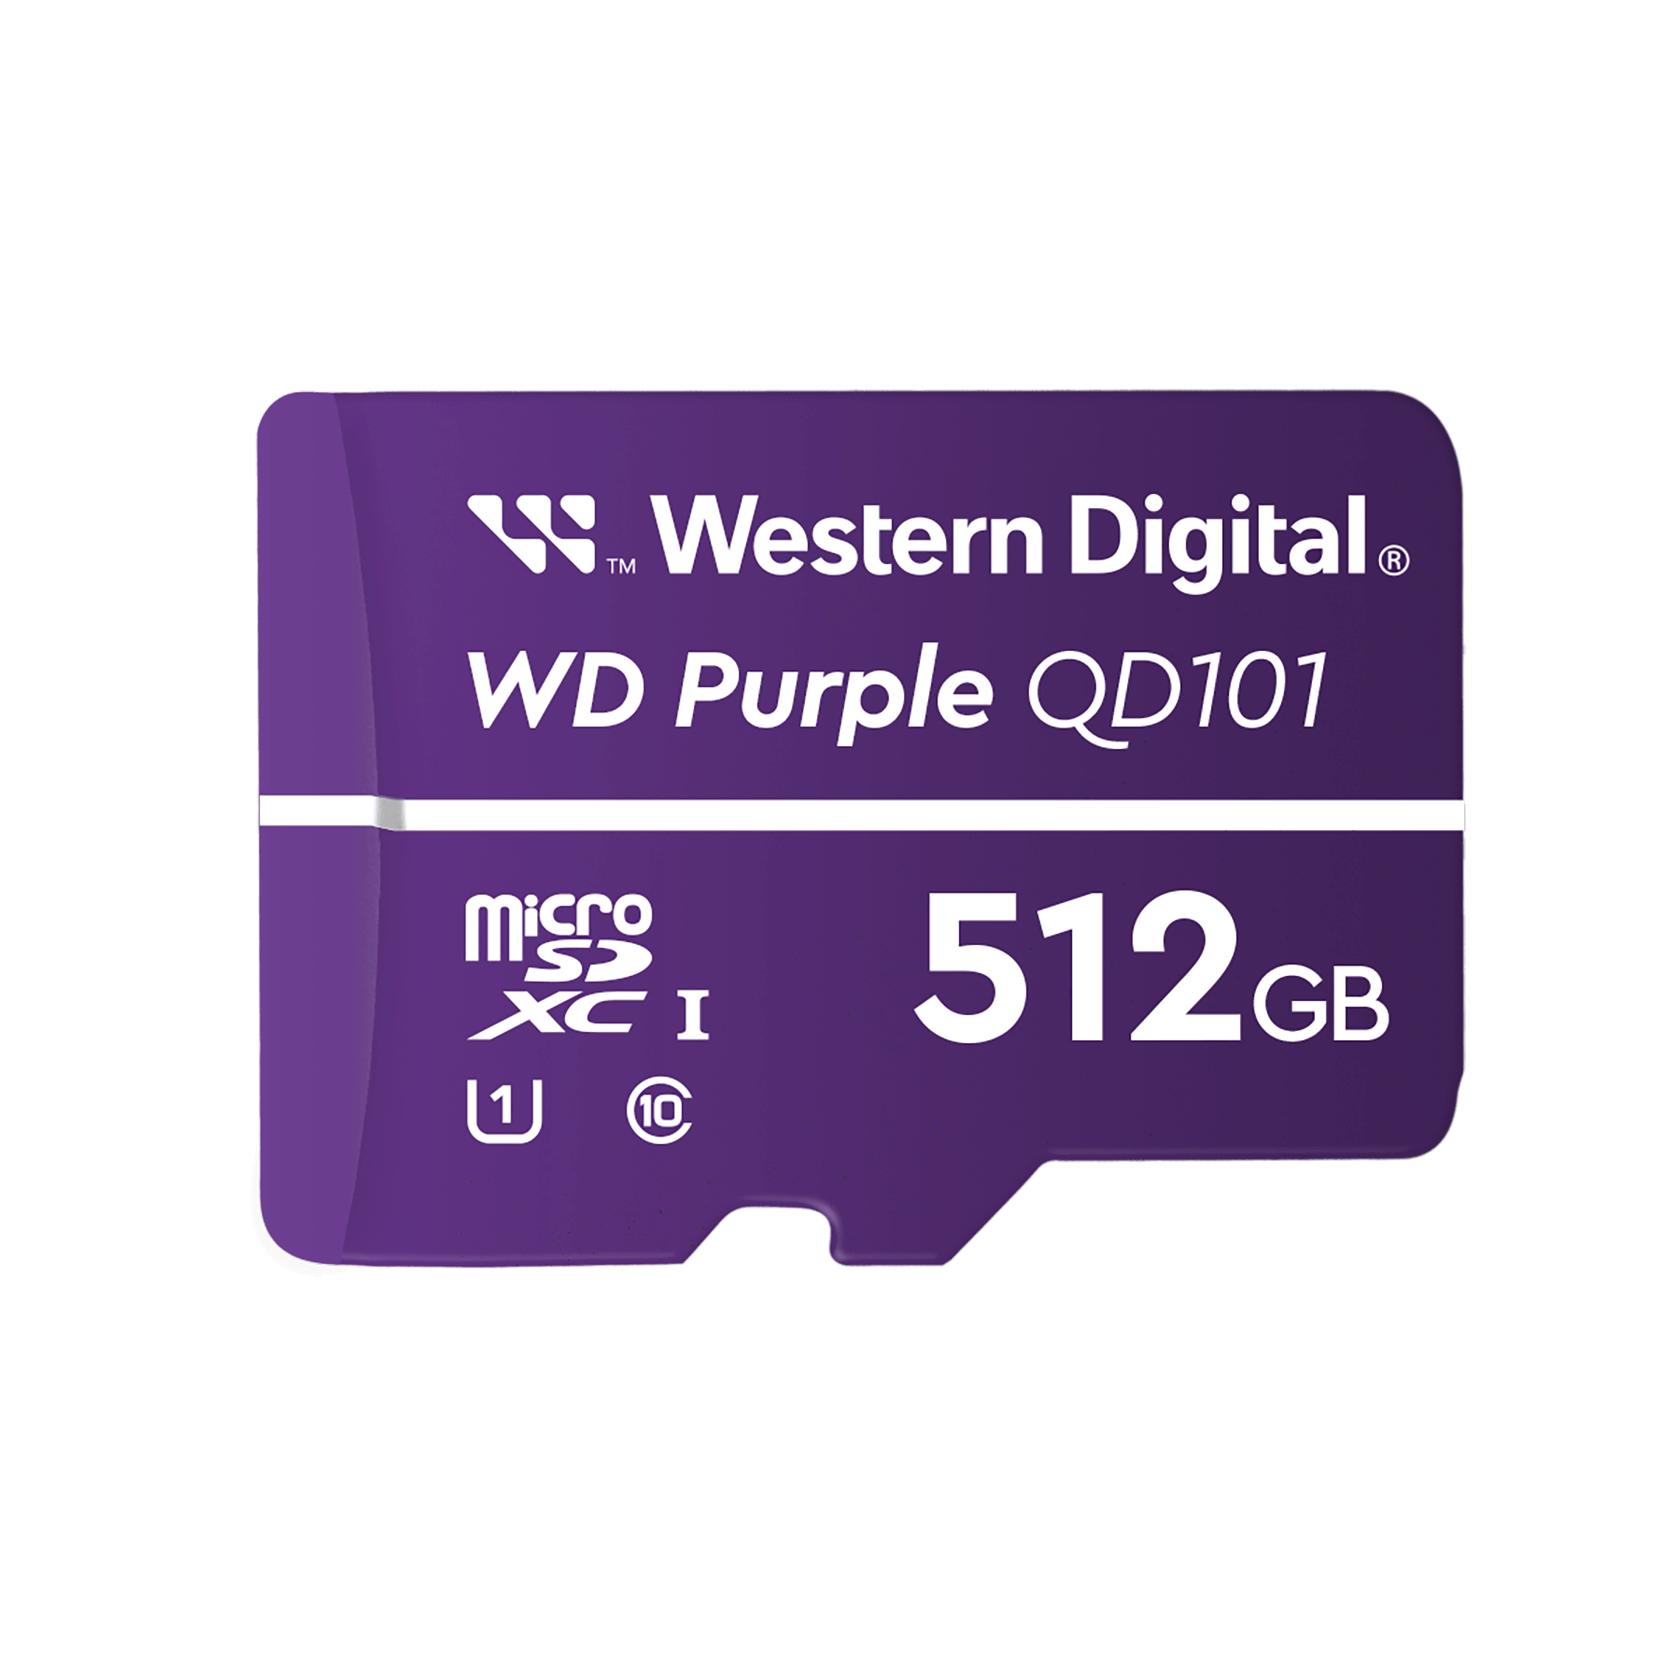 Western Digital 512GB WD Purple SC QD101 - WDD512G1P0C